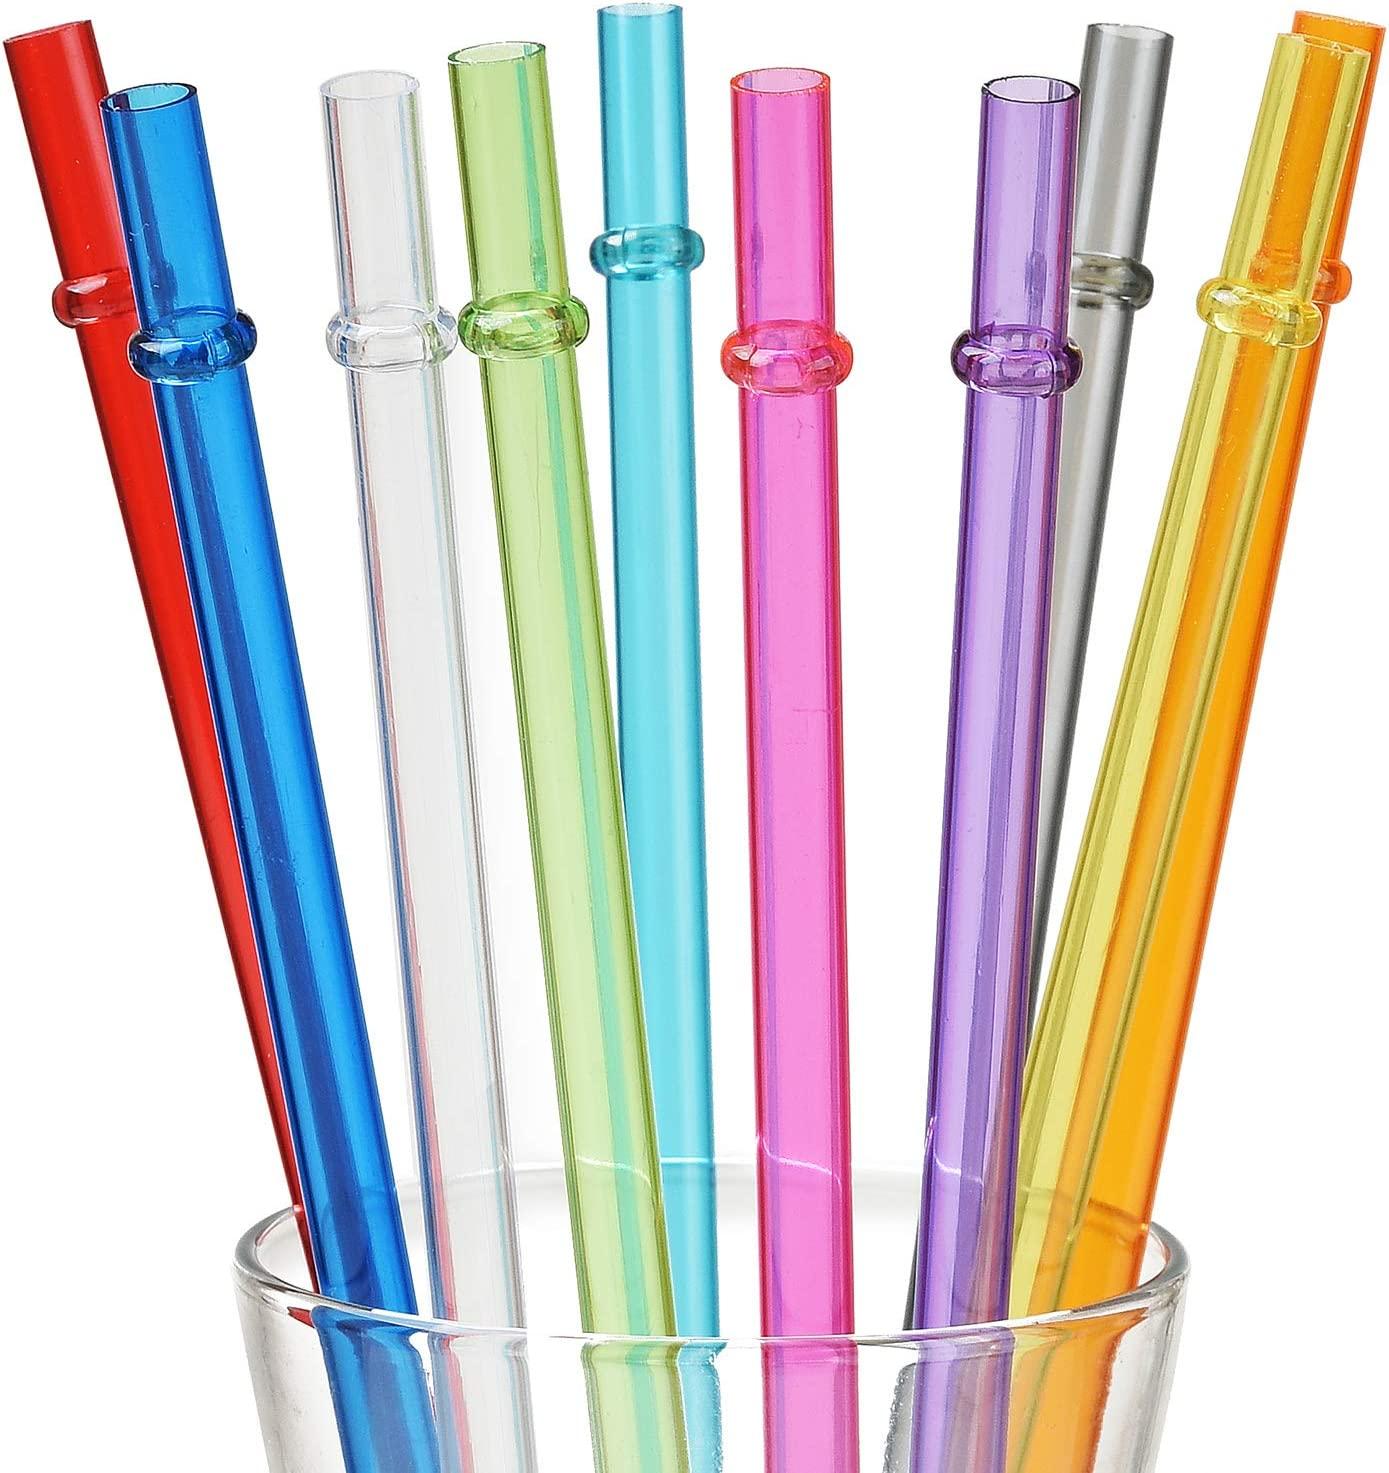  ALINK 10.5 in Tritan Hard Plastic Clear Straws, Long